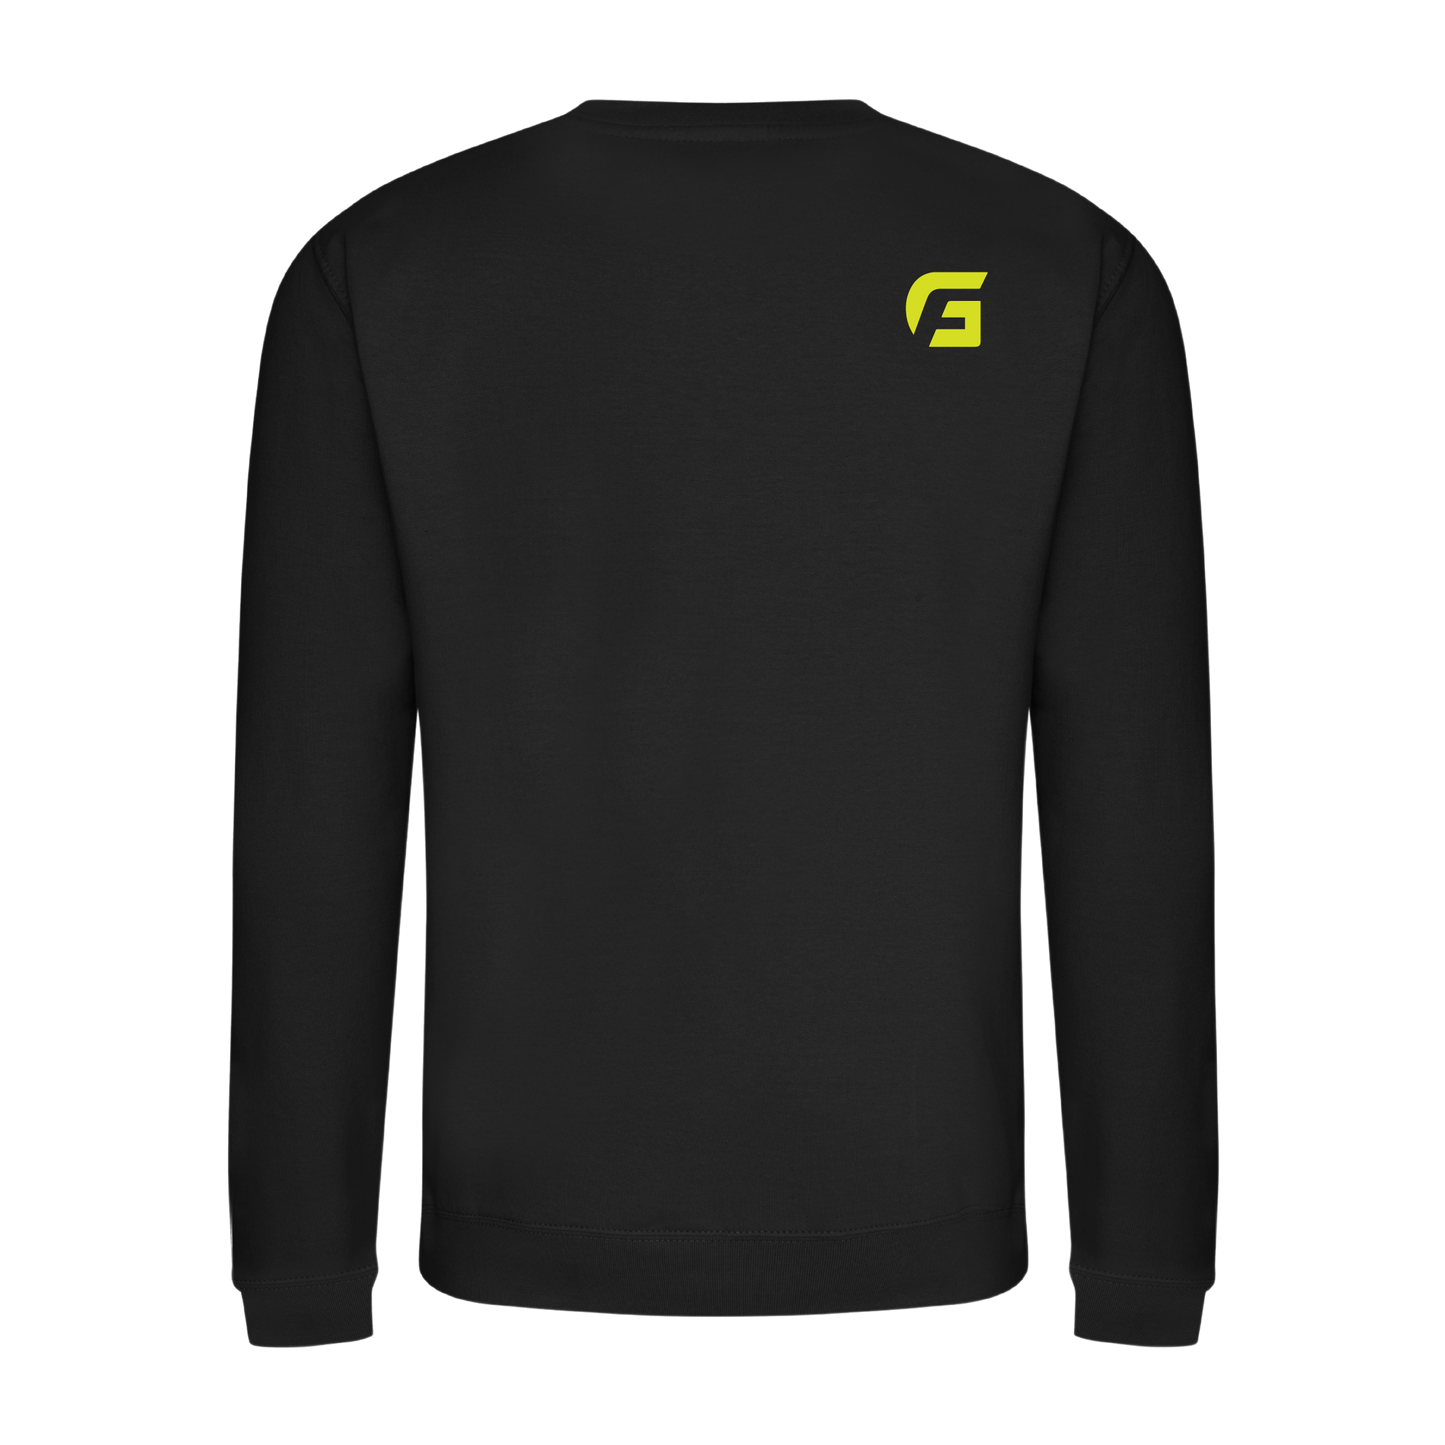 Focusgolf Approach Men's Carbon Black Sweatshirt